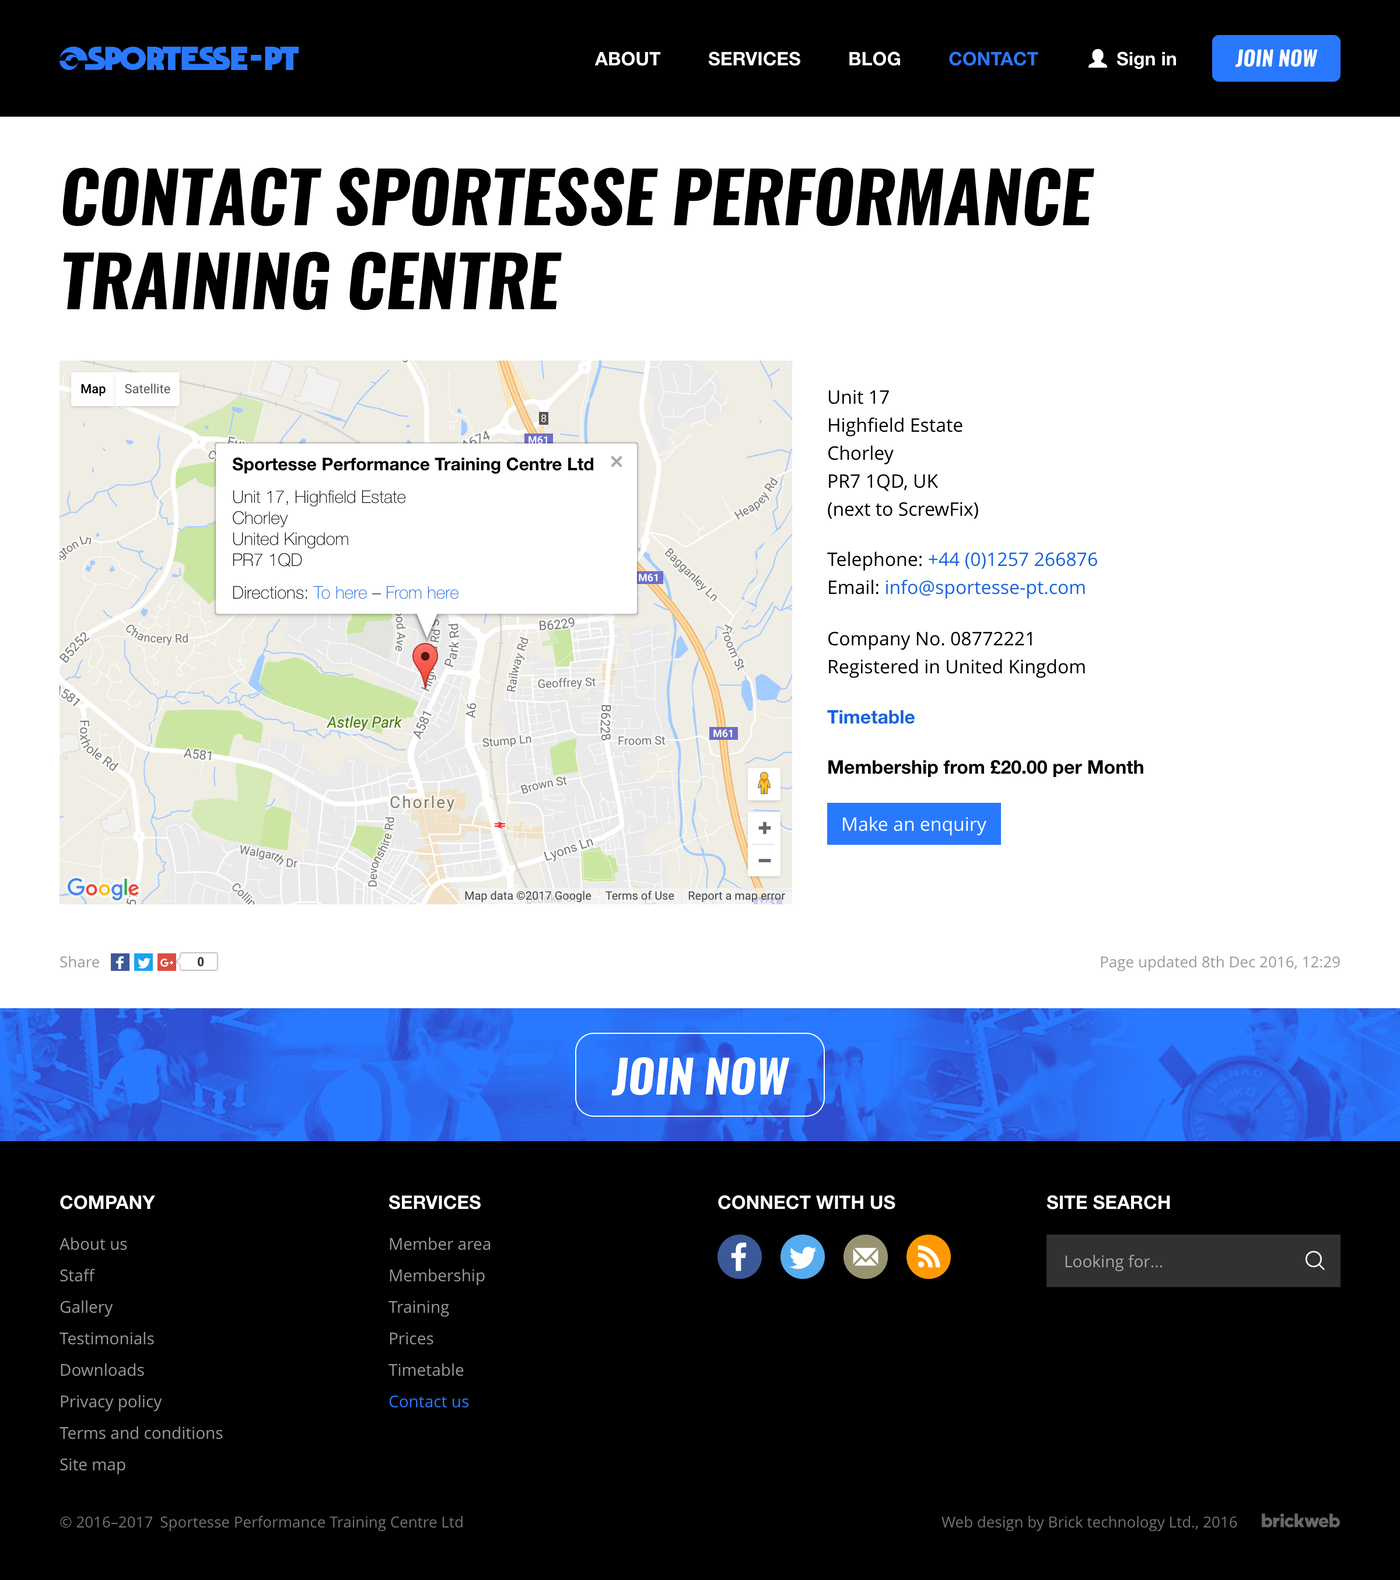 Sportesse Performance Training Center Contact